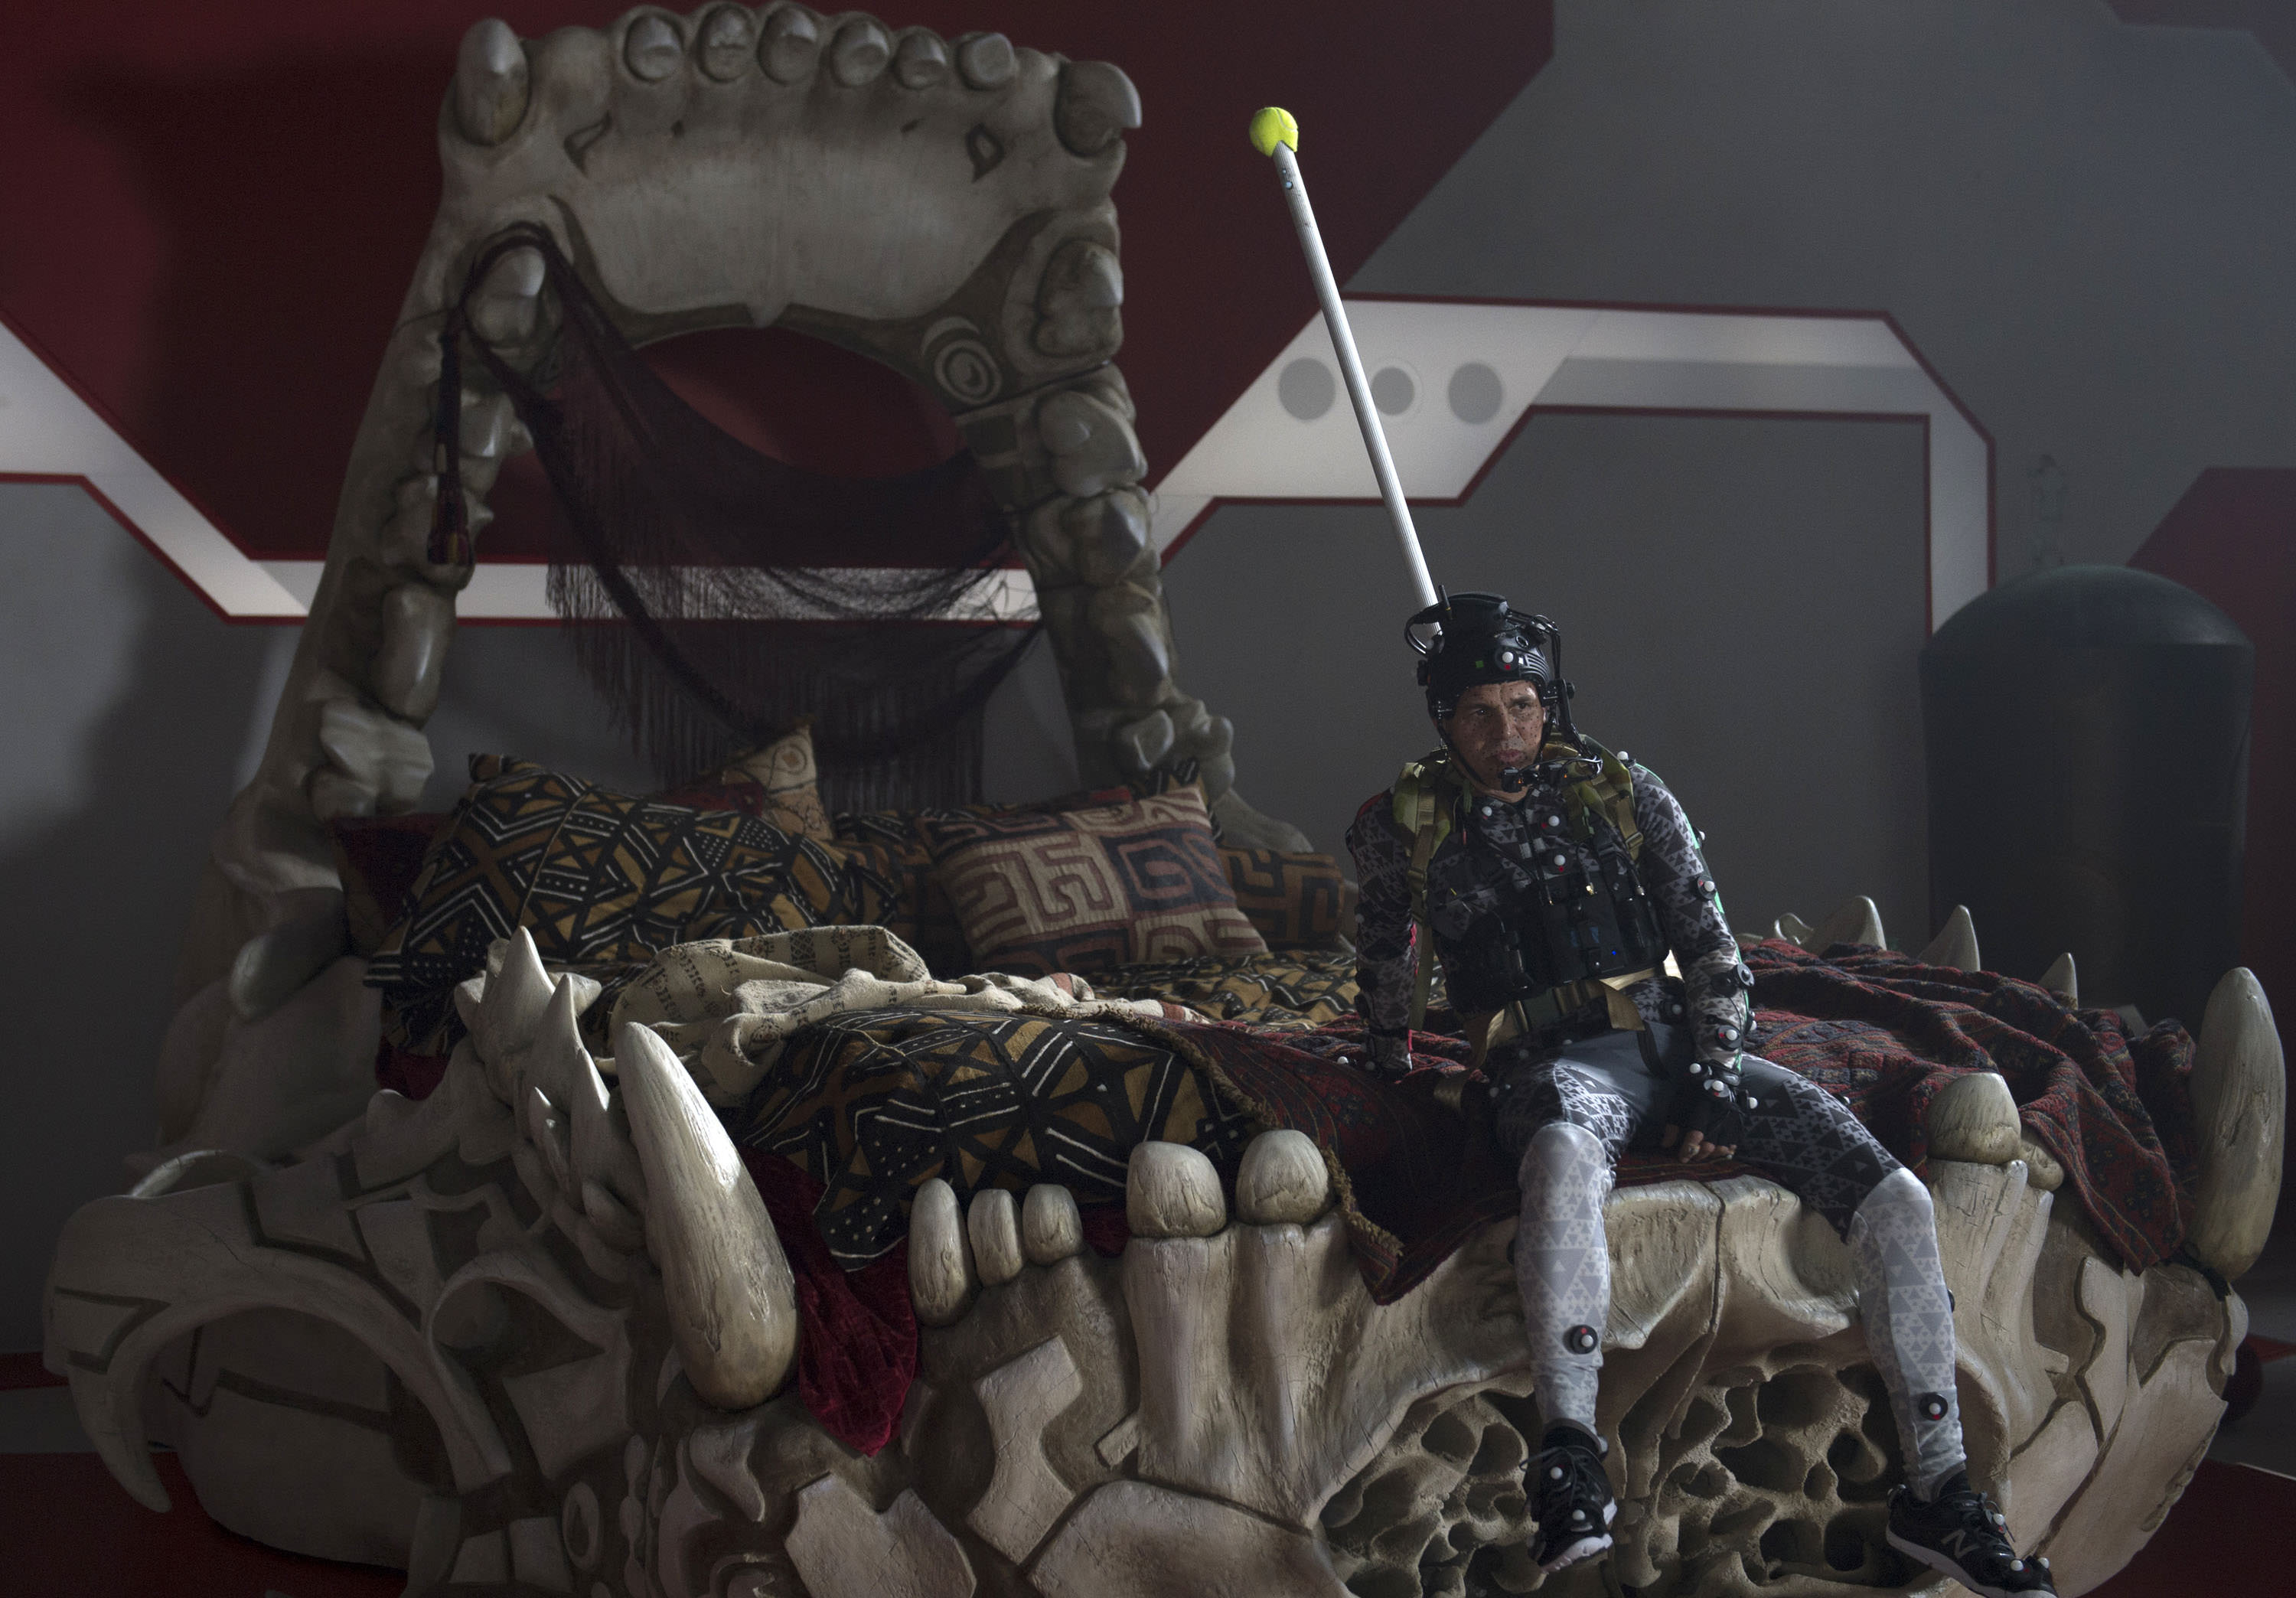 Mark Ruffalo preparing for a scene as his character The Hulk in Thor: Ragnarok (2017).